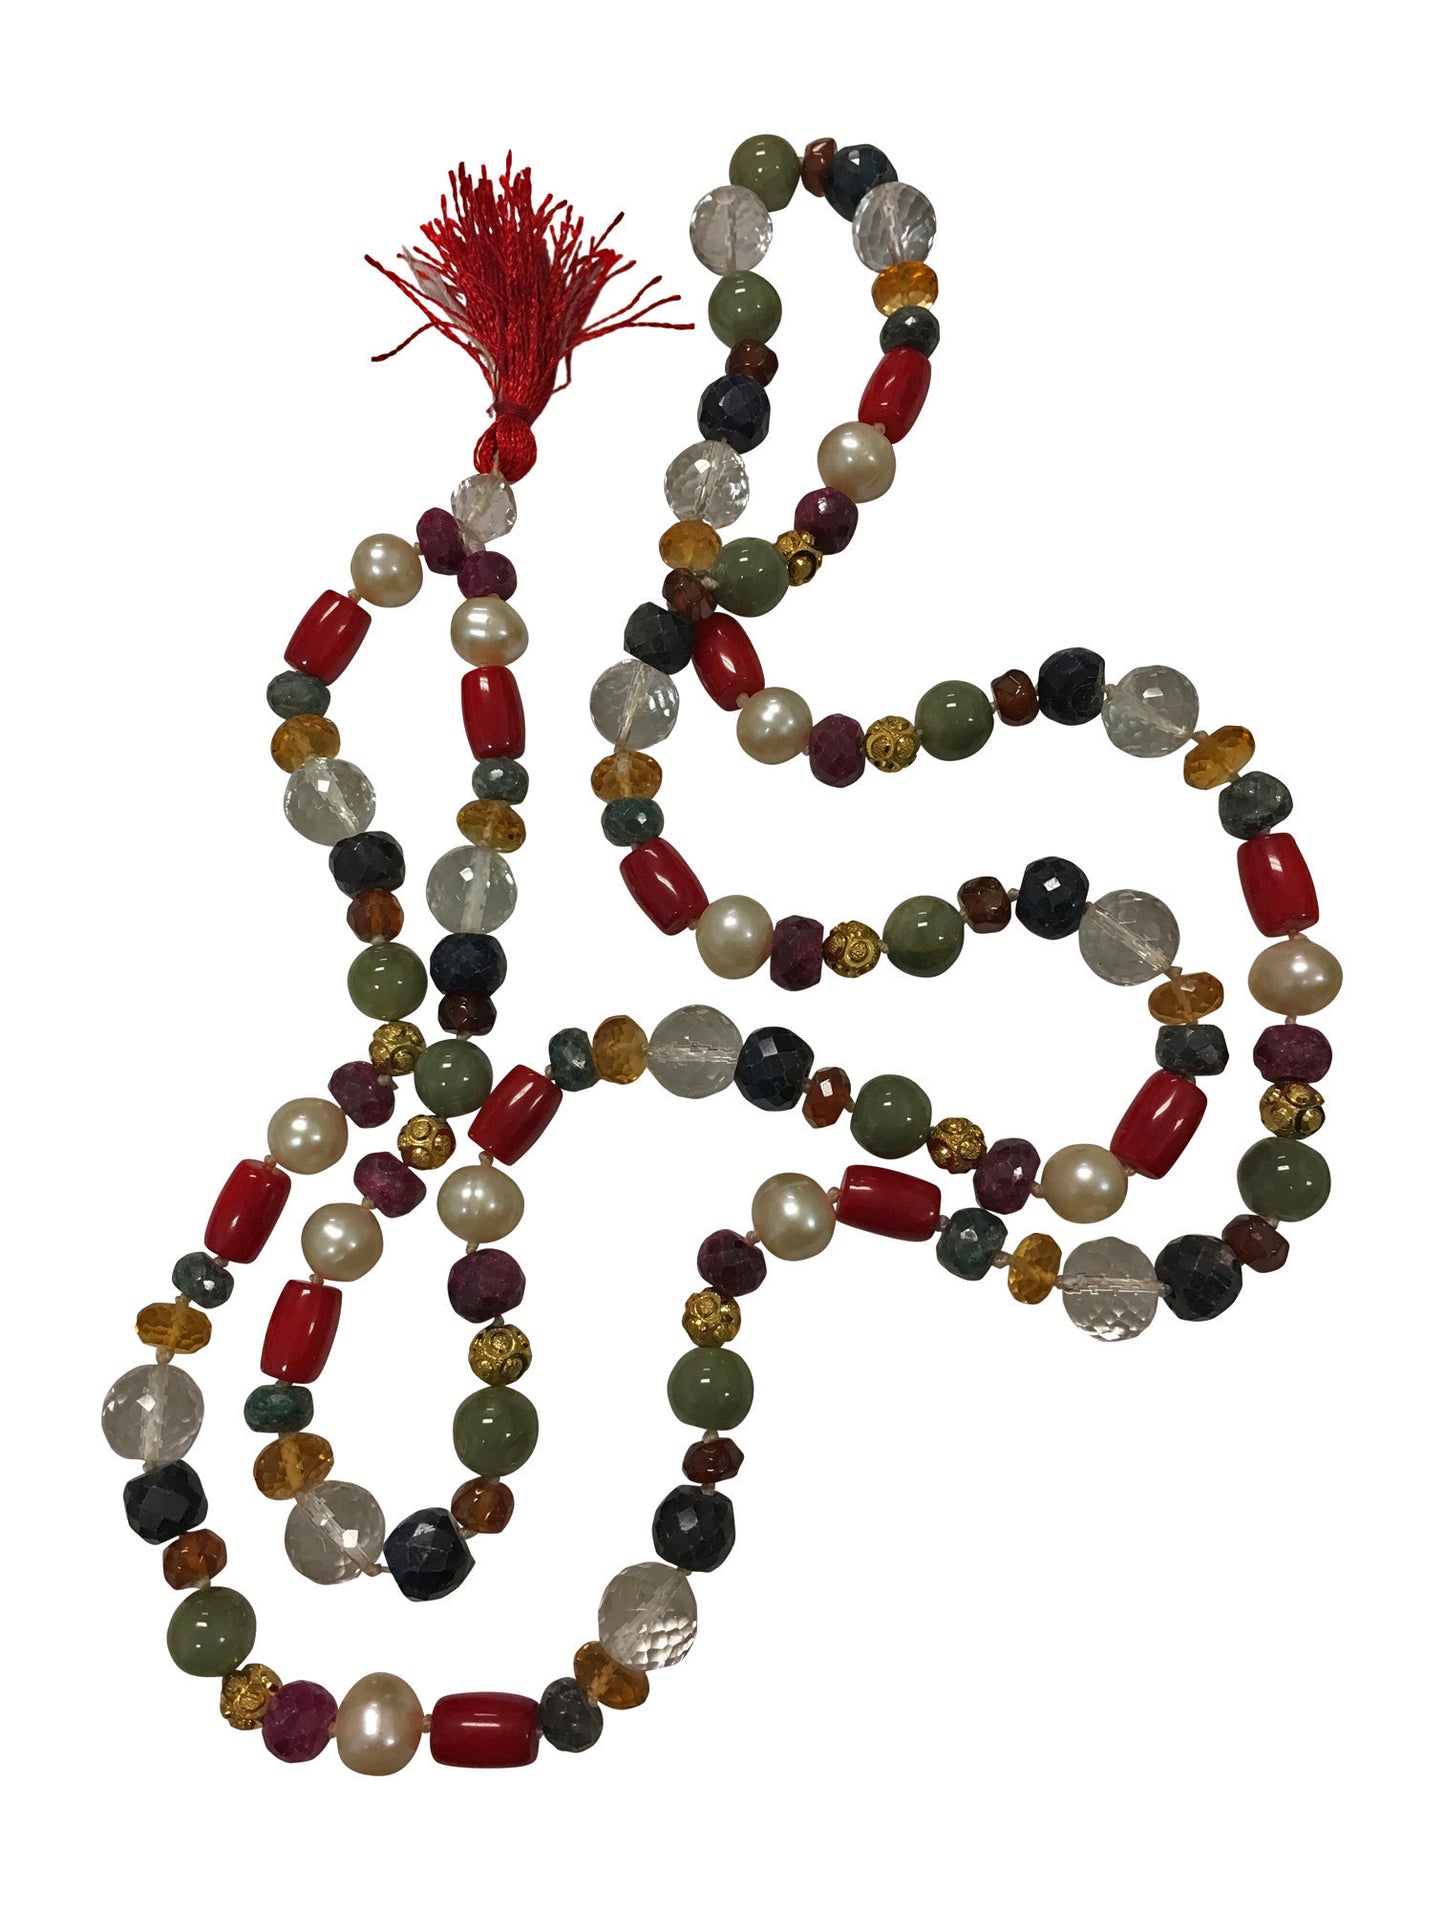 Nine Planet Navgraha Astrological Mala Yoga Prayer Bead Necklace - Ambali Fashion Necklaces accessory, bohemian, boho, casual, classic, eastern, ethnic, gypsy, hippie, meditation, new age, tr